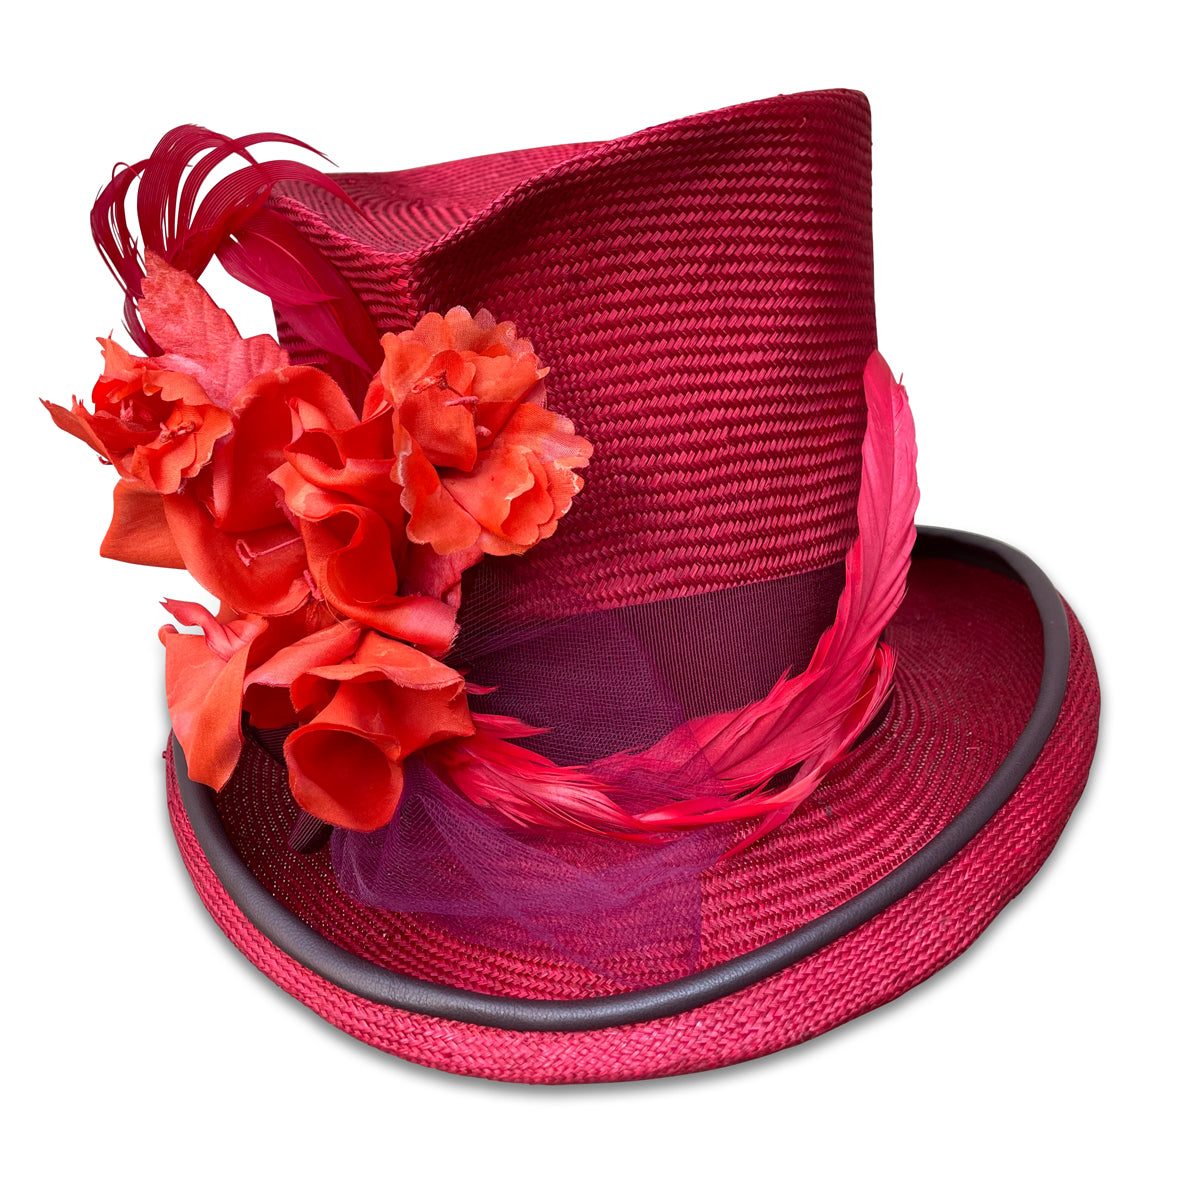 Red Kentucky Derby top hat for women